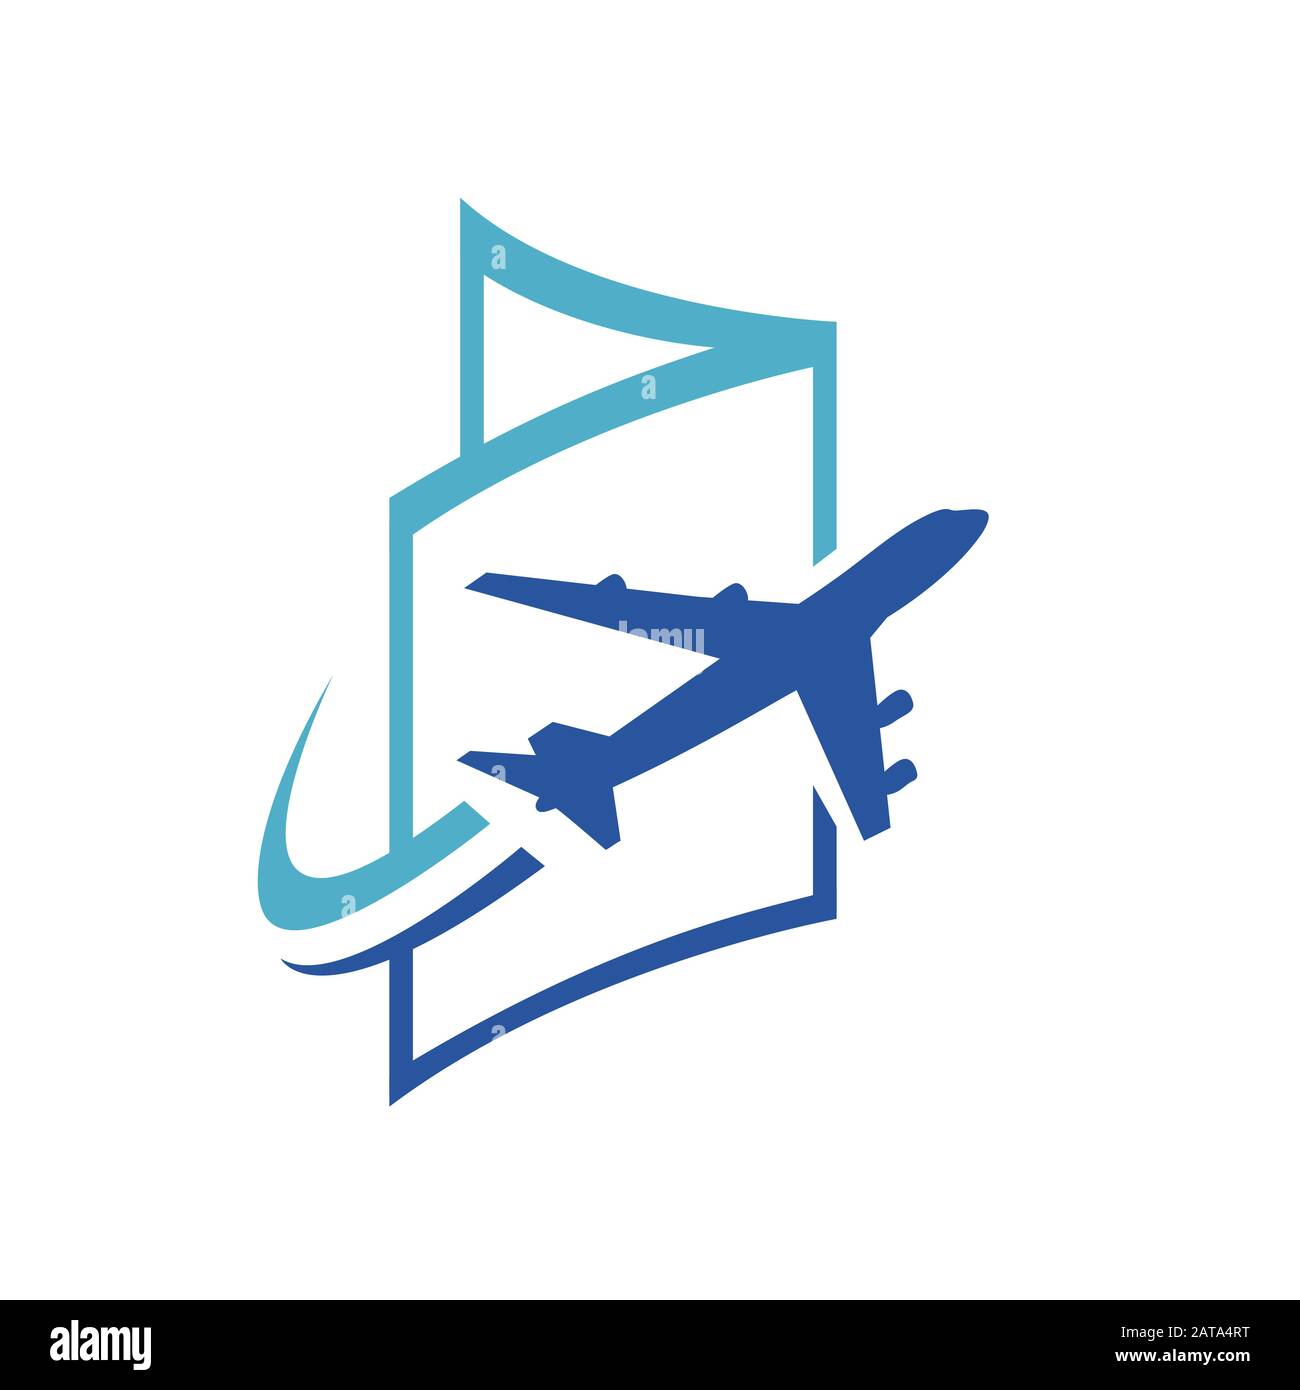 flying airplane on identity book visa passport logo design vector icon illustration Stock Vector